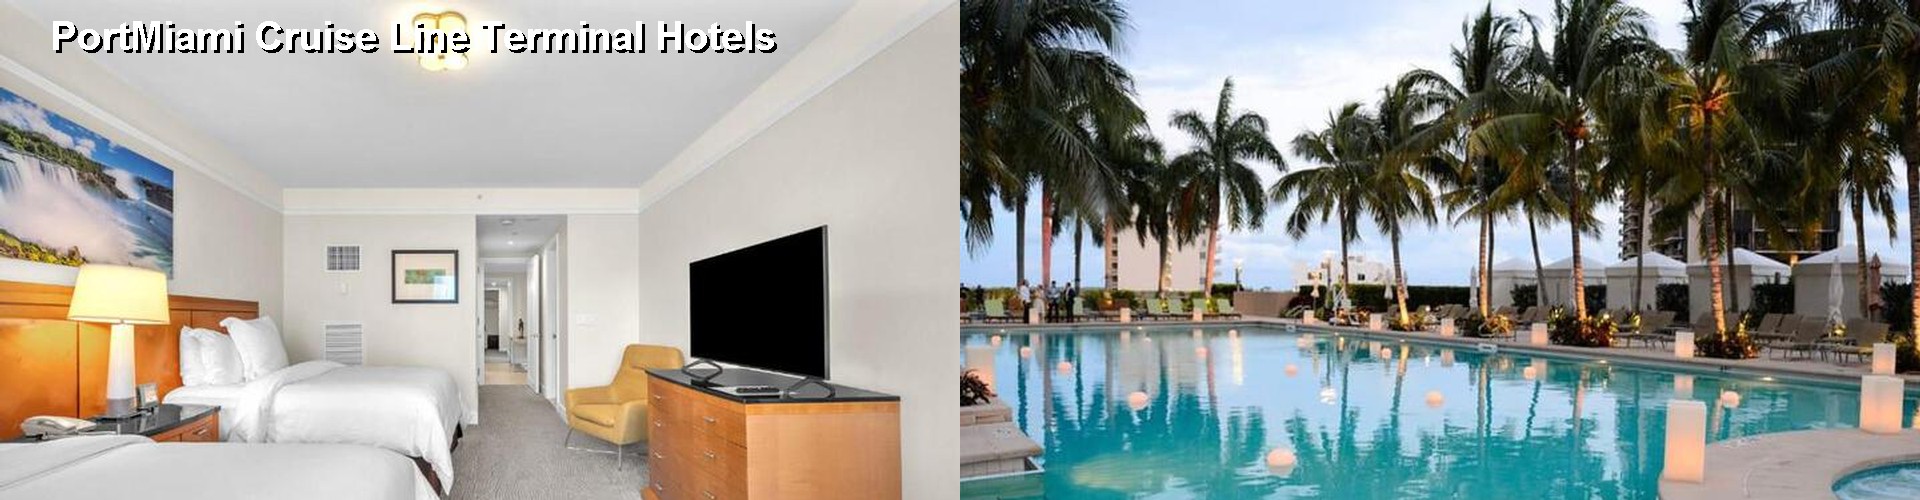 3 Best Hotels near PortMiami Cruise Line Terminal